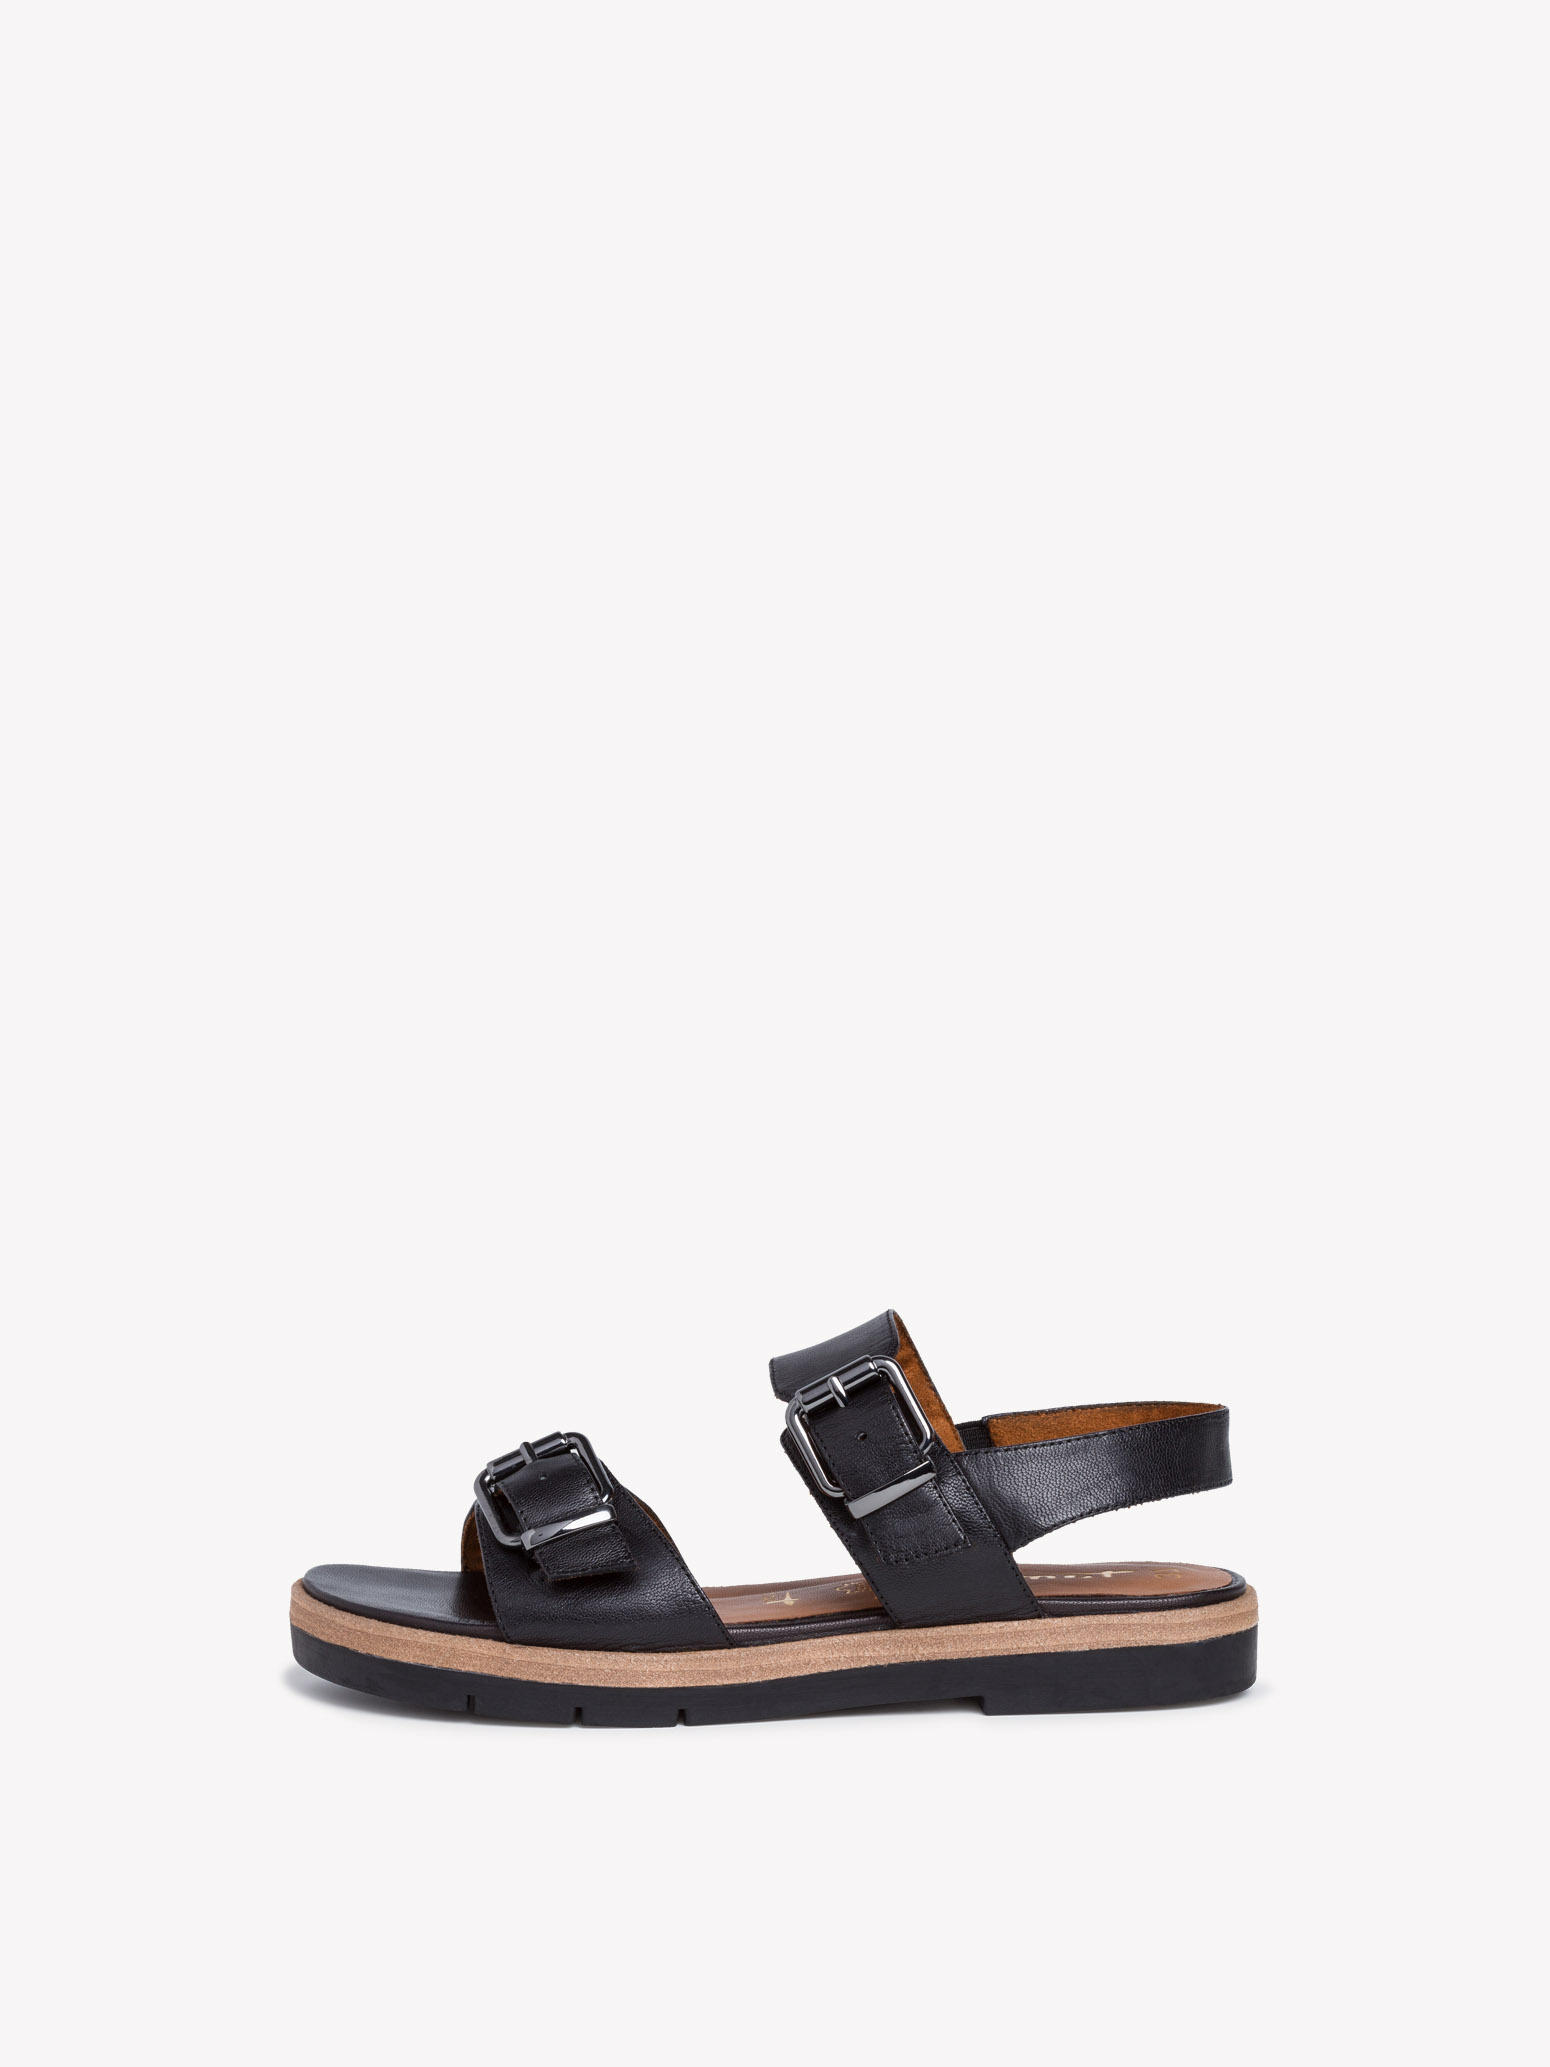 Leather Sandal 1-1-28109-24: Buy Tamaris Sandals online!